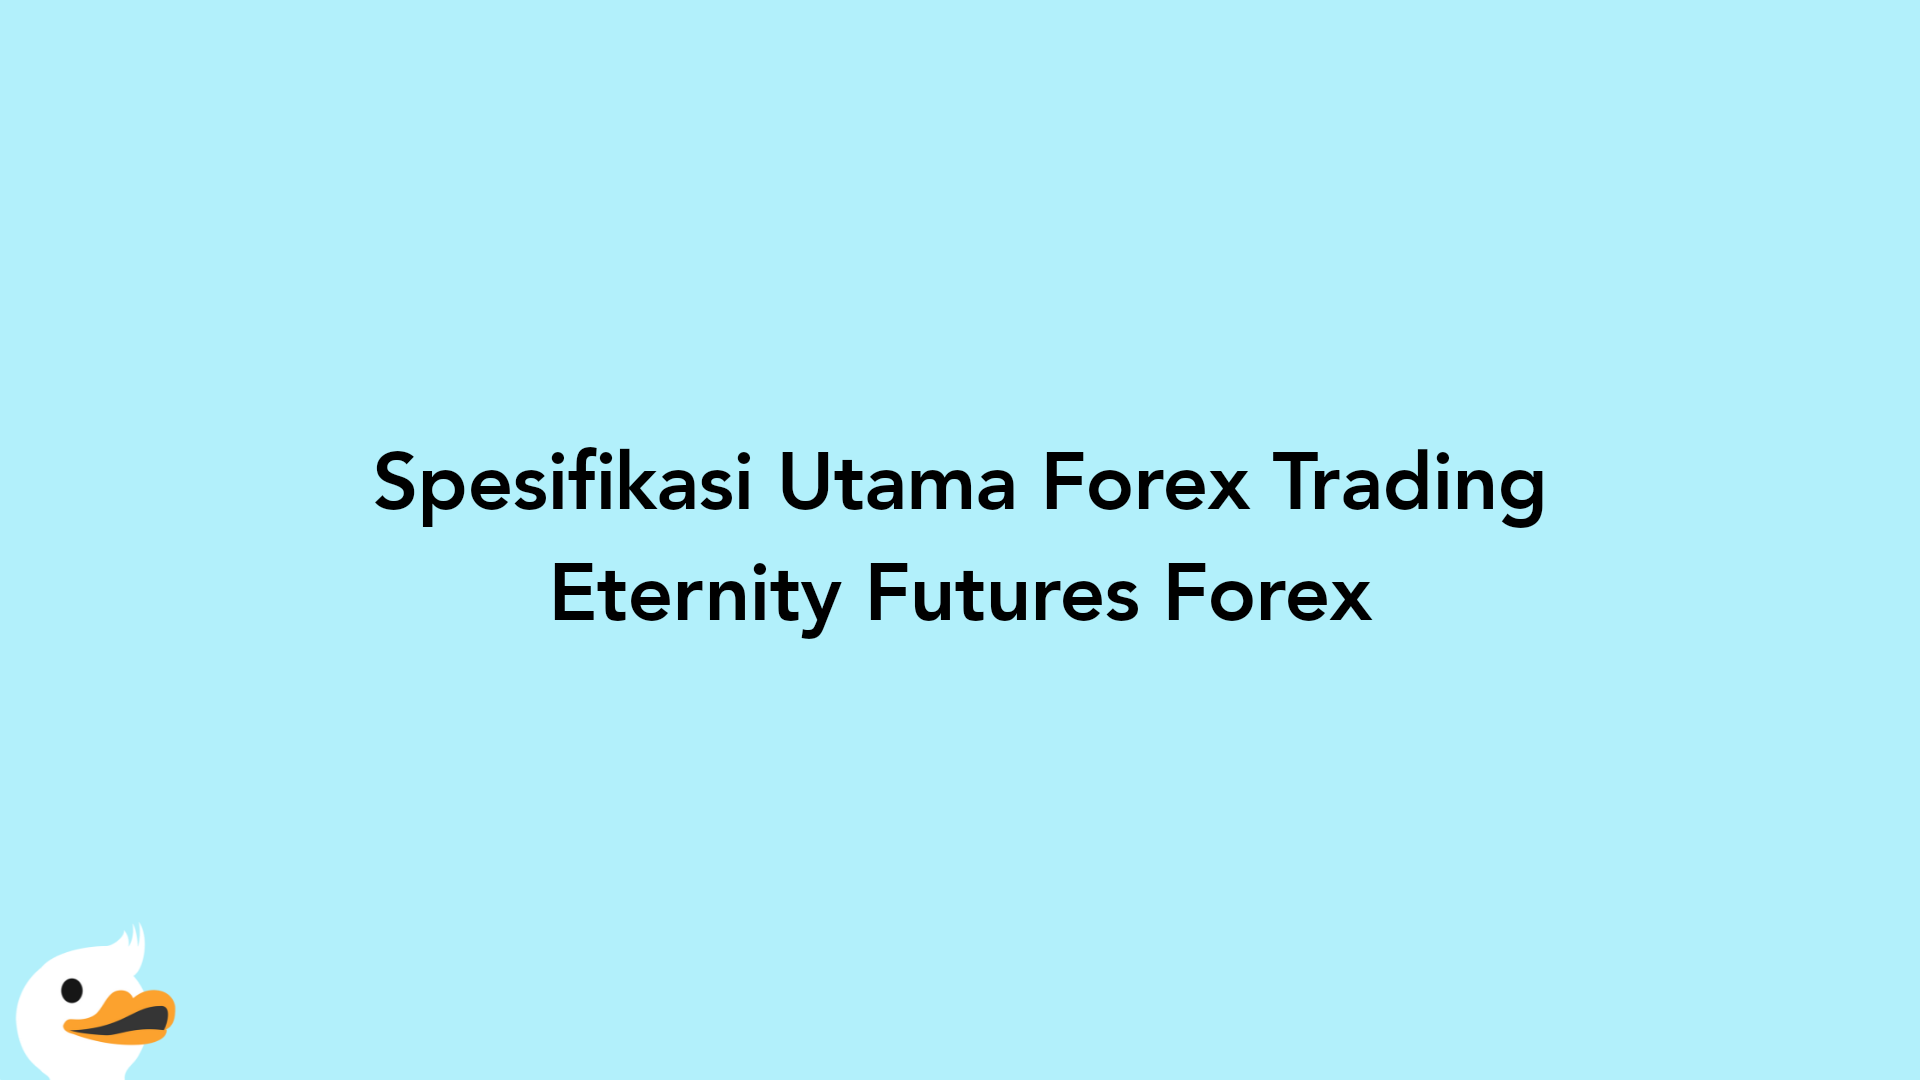 Spesifikasi Utama Forex Trading Eternity Futures Forex